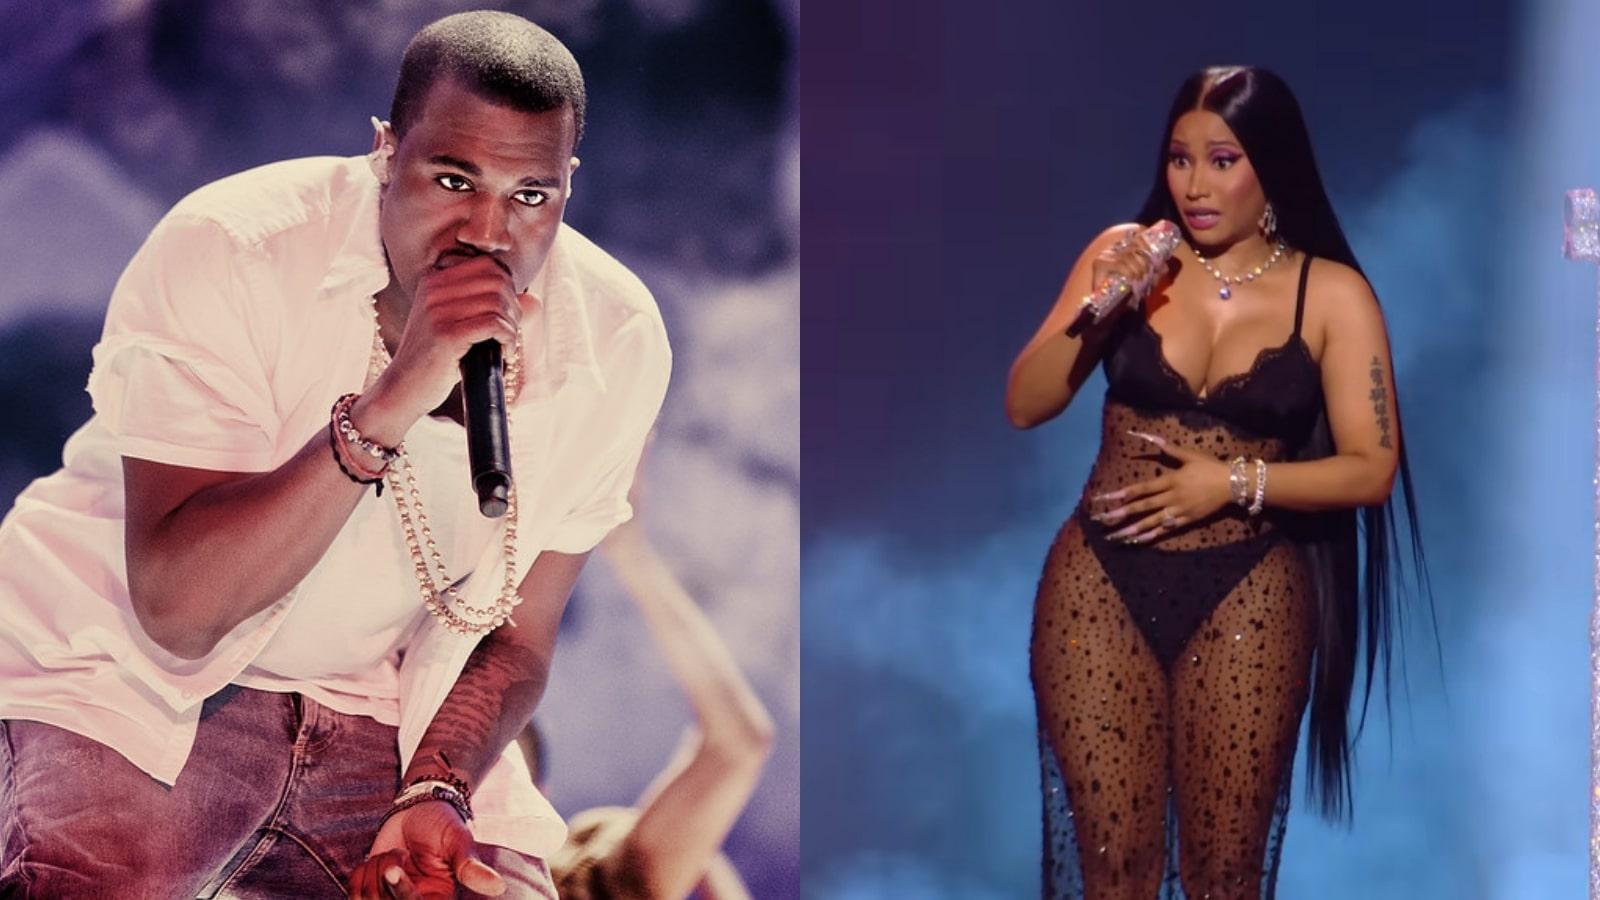 Kanye West and Nicki Minaj performing